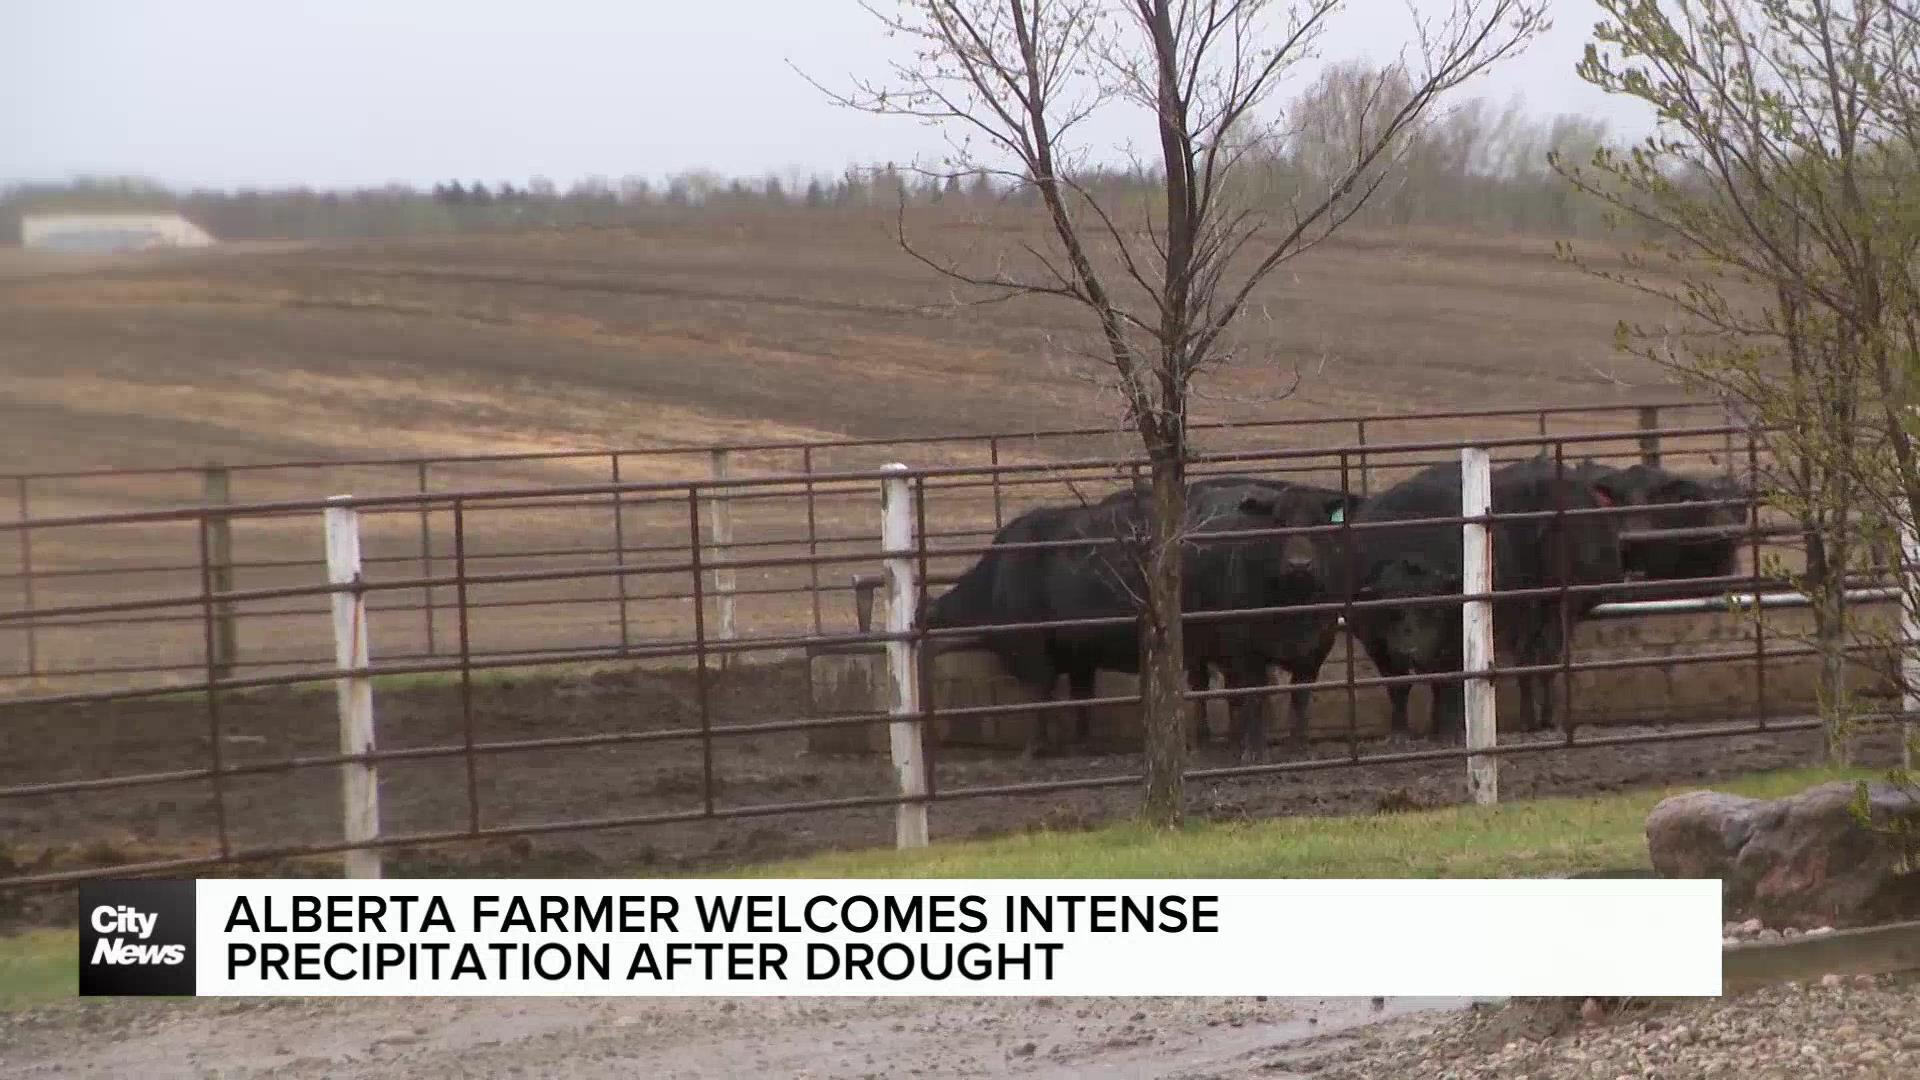 Alberta farmer welcomes rainfall after drought